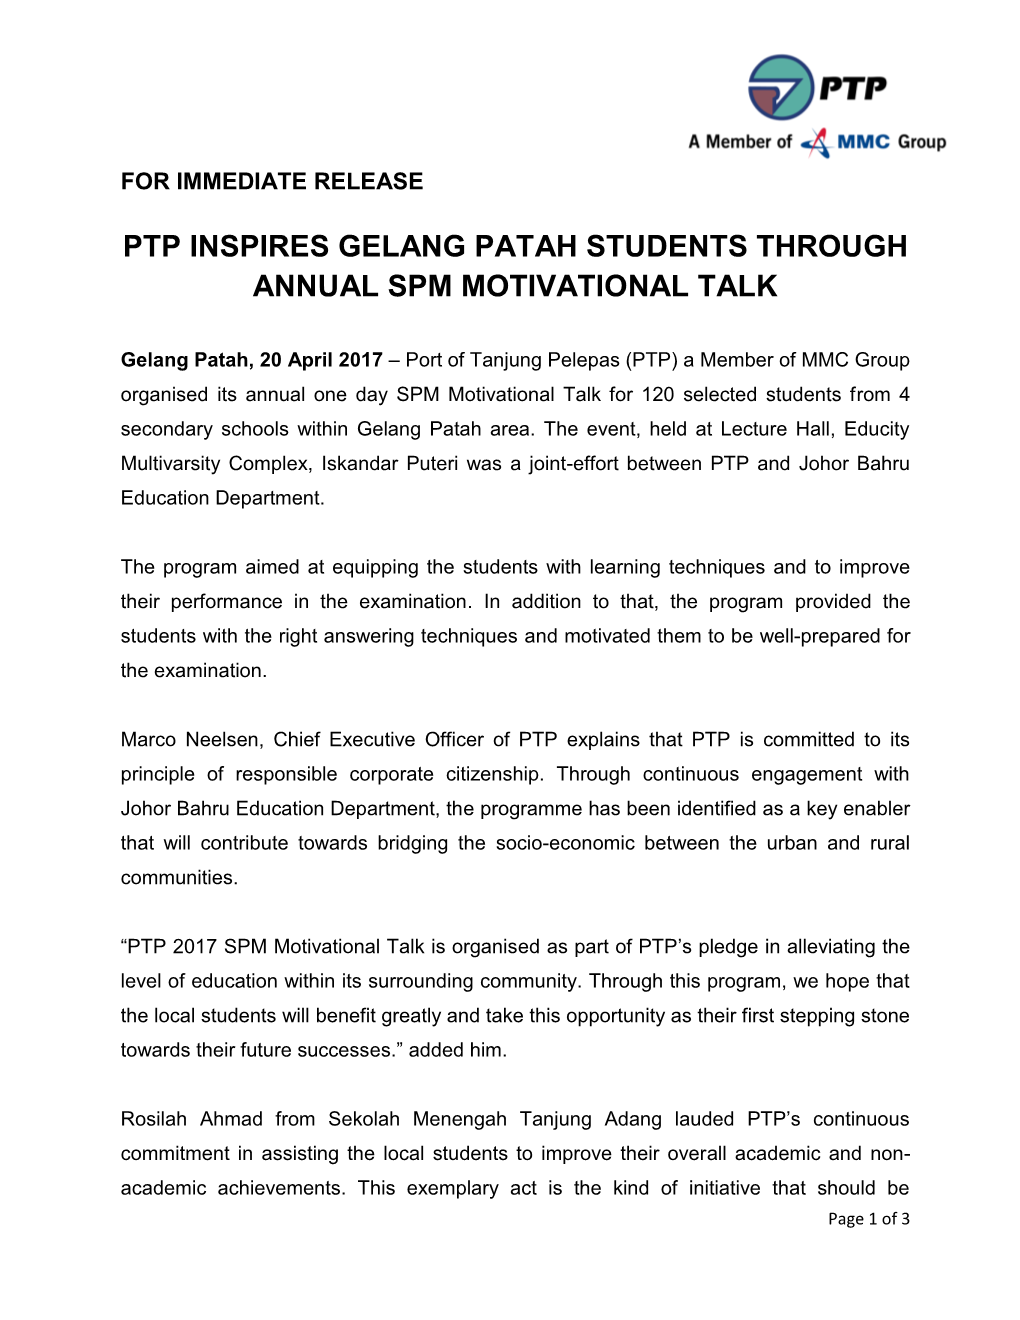 Ptp Inspires Gelang Patah Students Through Annual Spm Motivational Talk